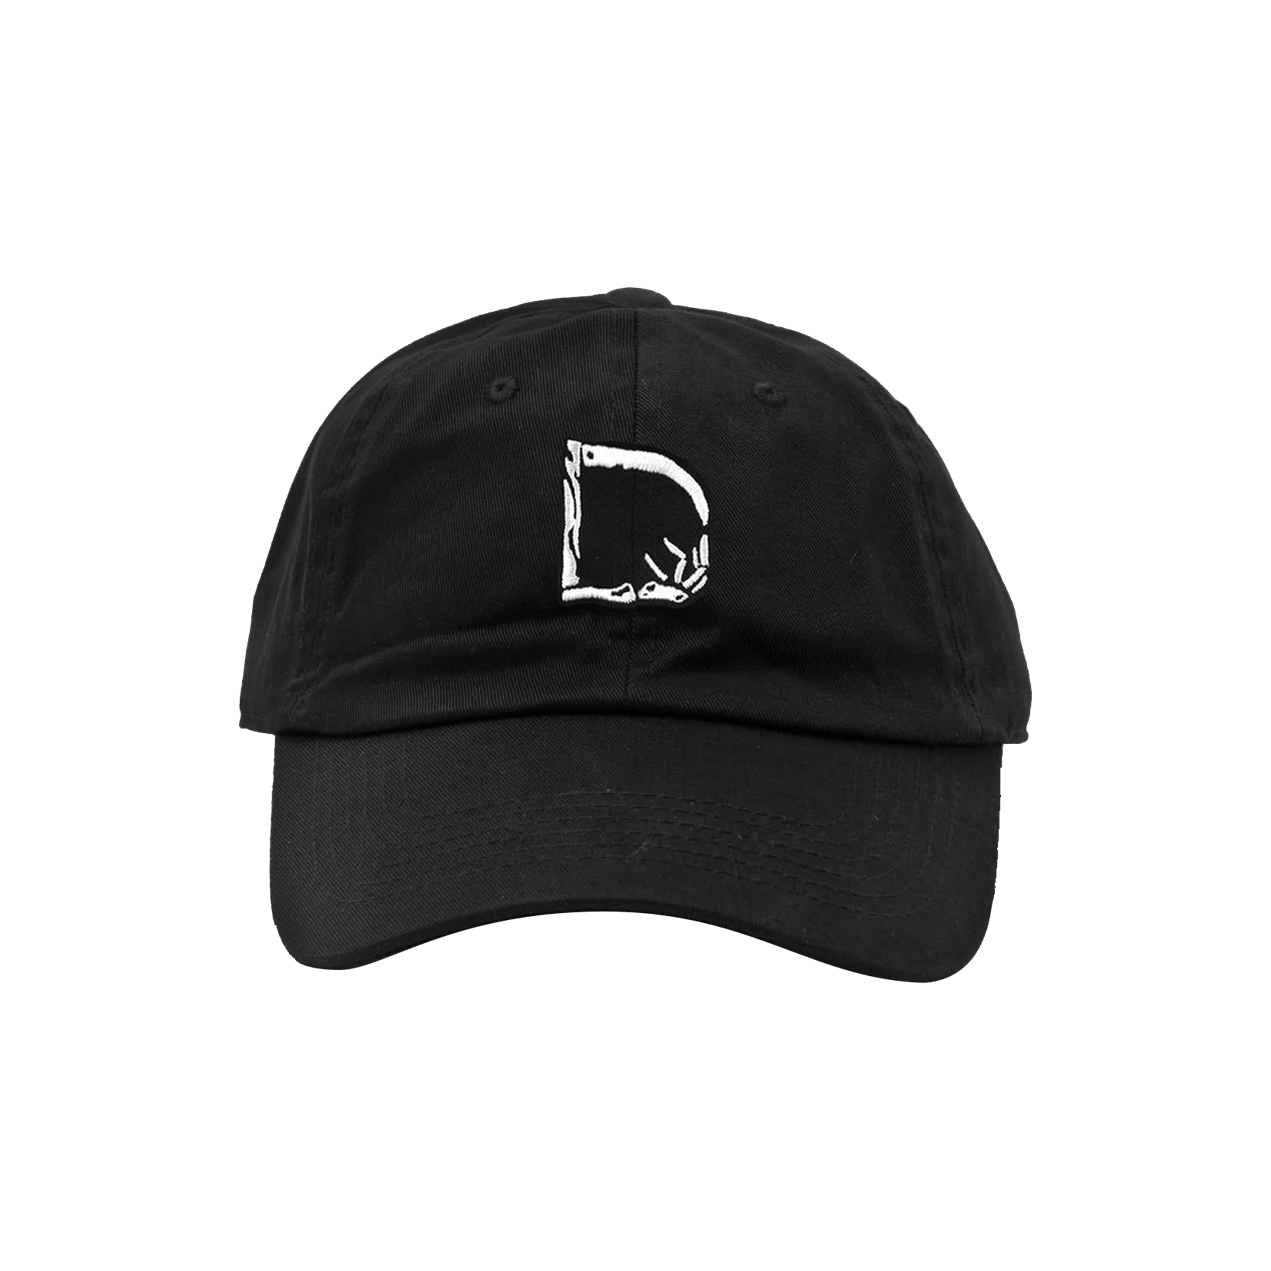 D Dad Hat